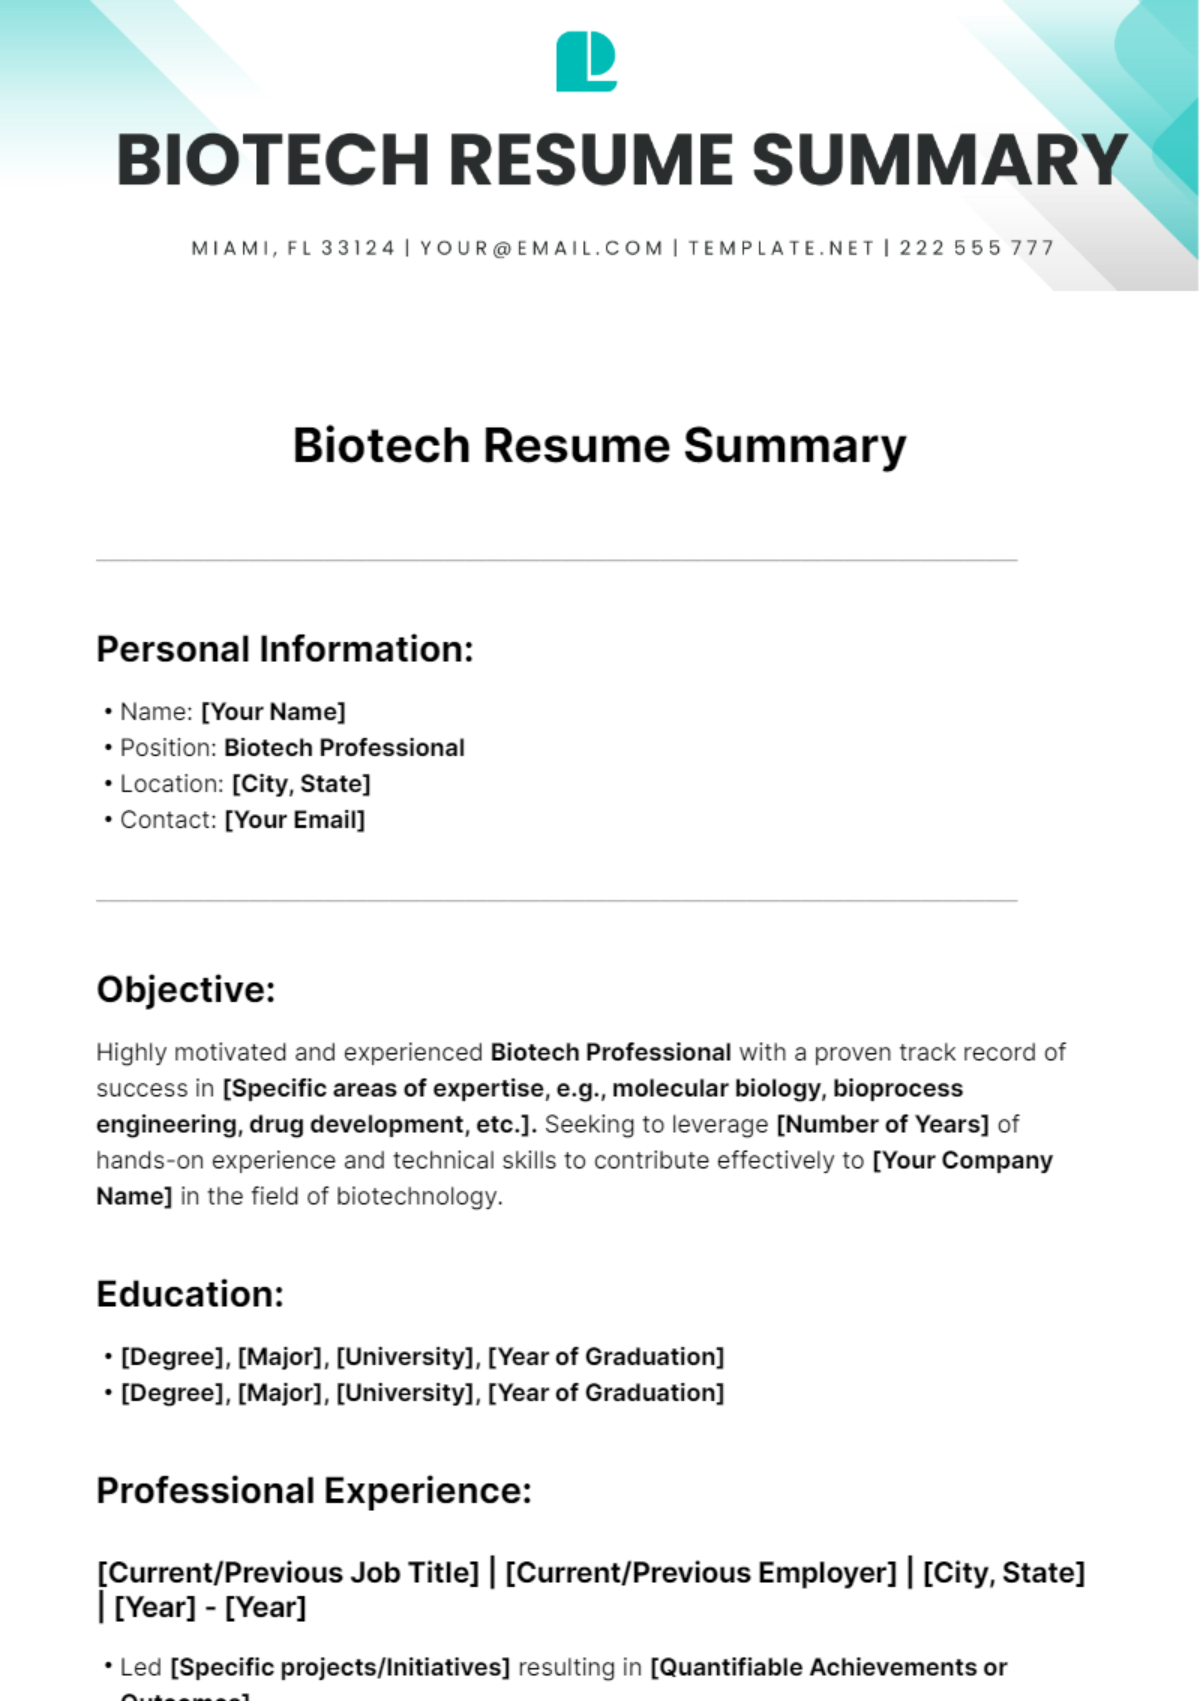 Biotech Resume Summary Template